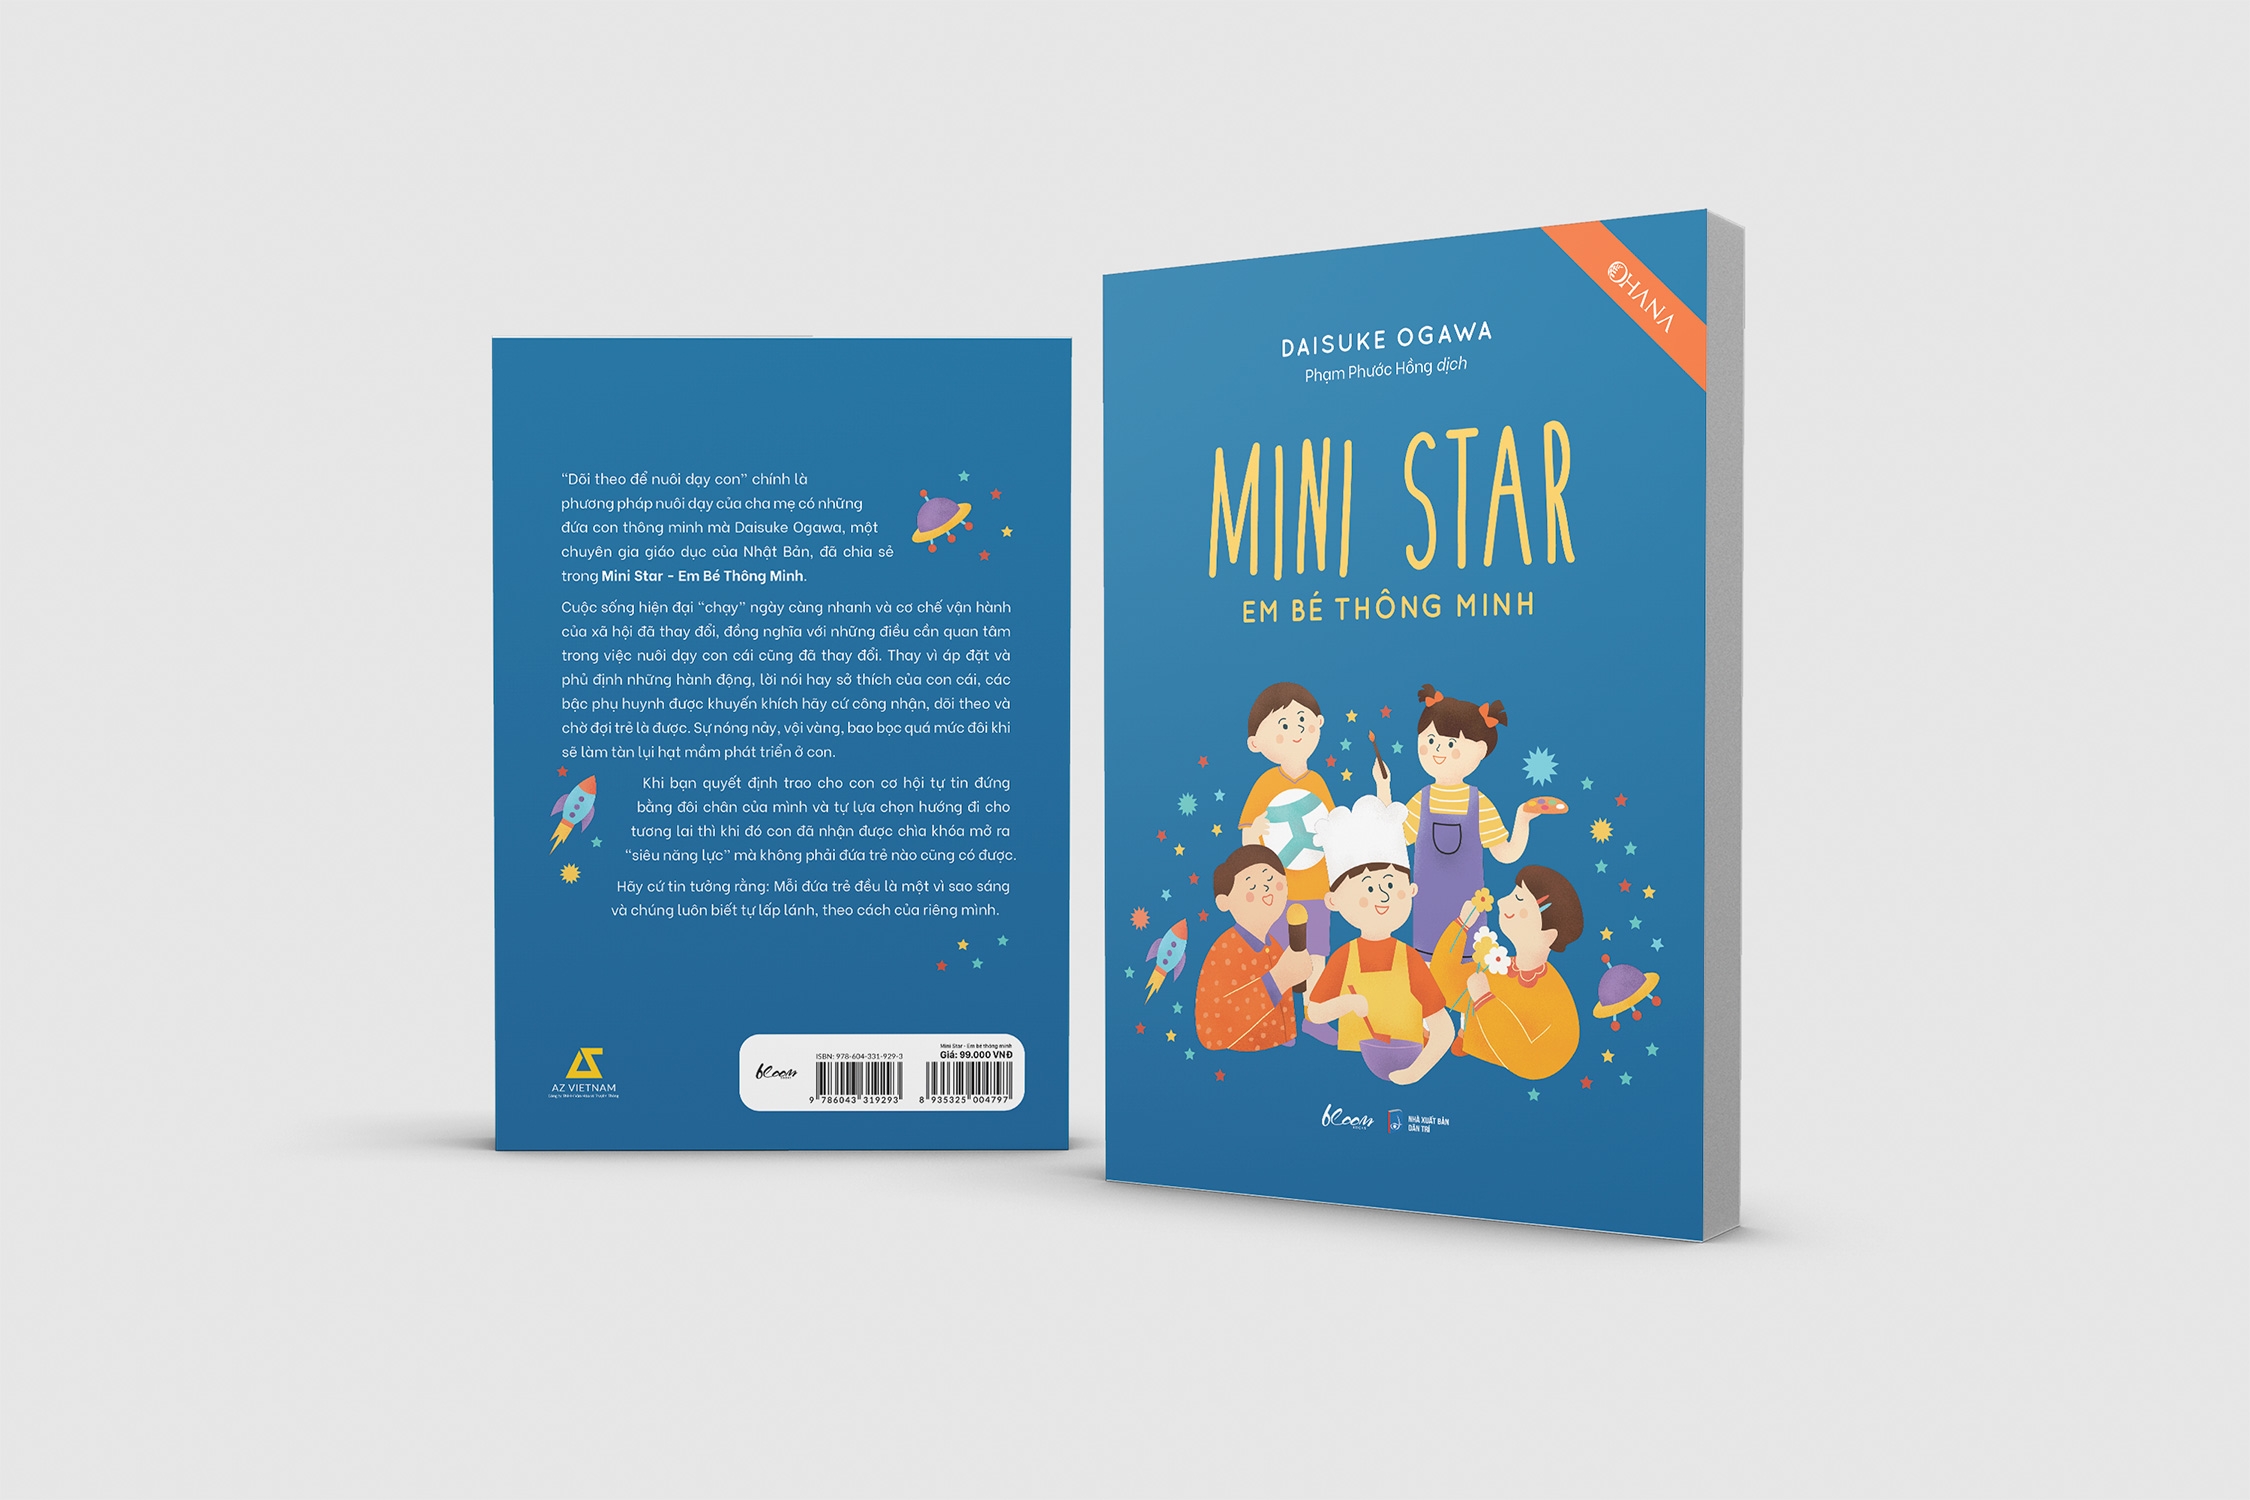 Mini Star - Em Bé Thông Minh PDF